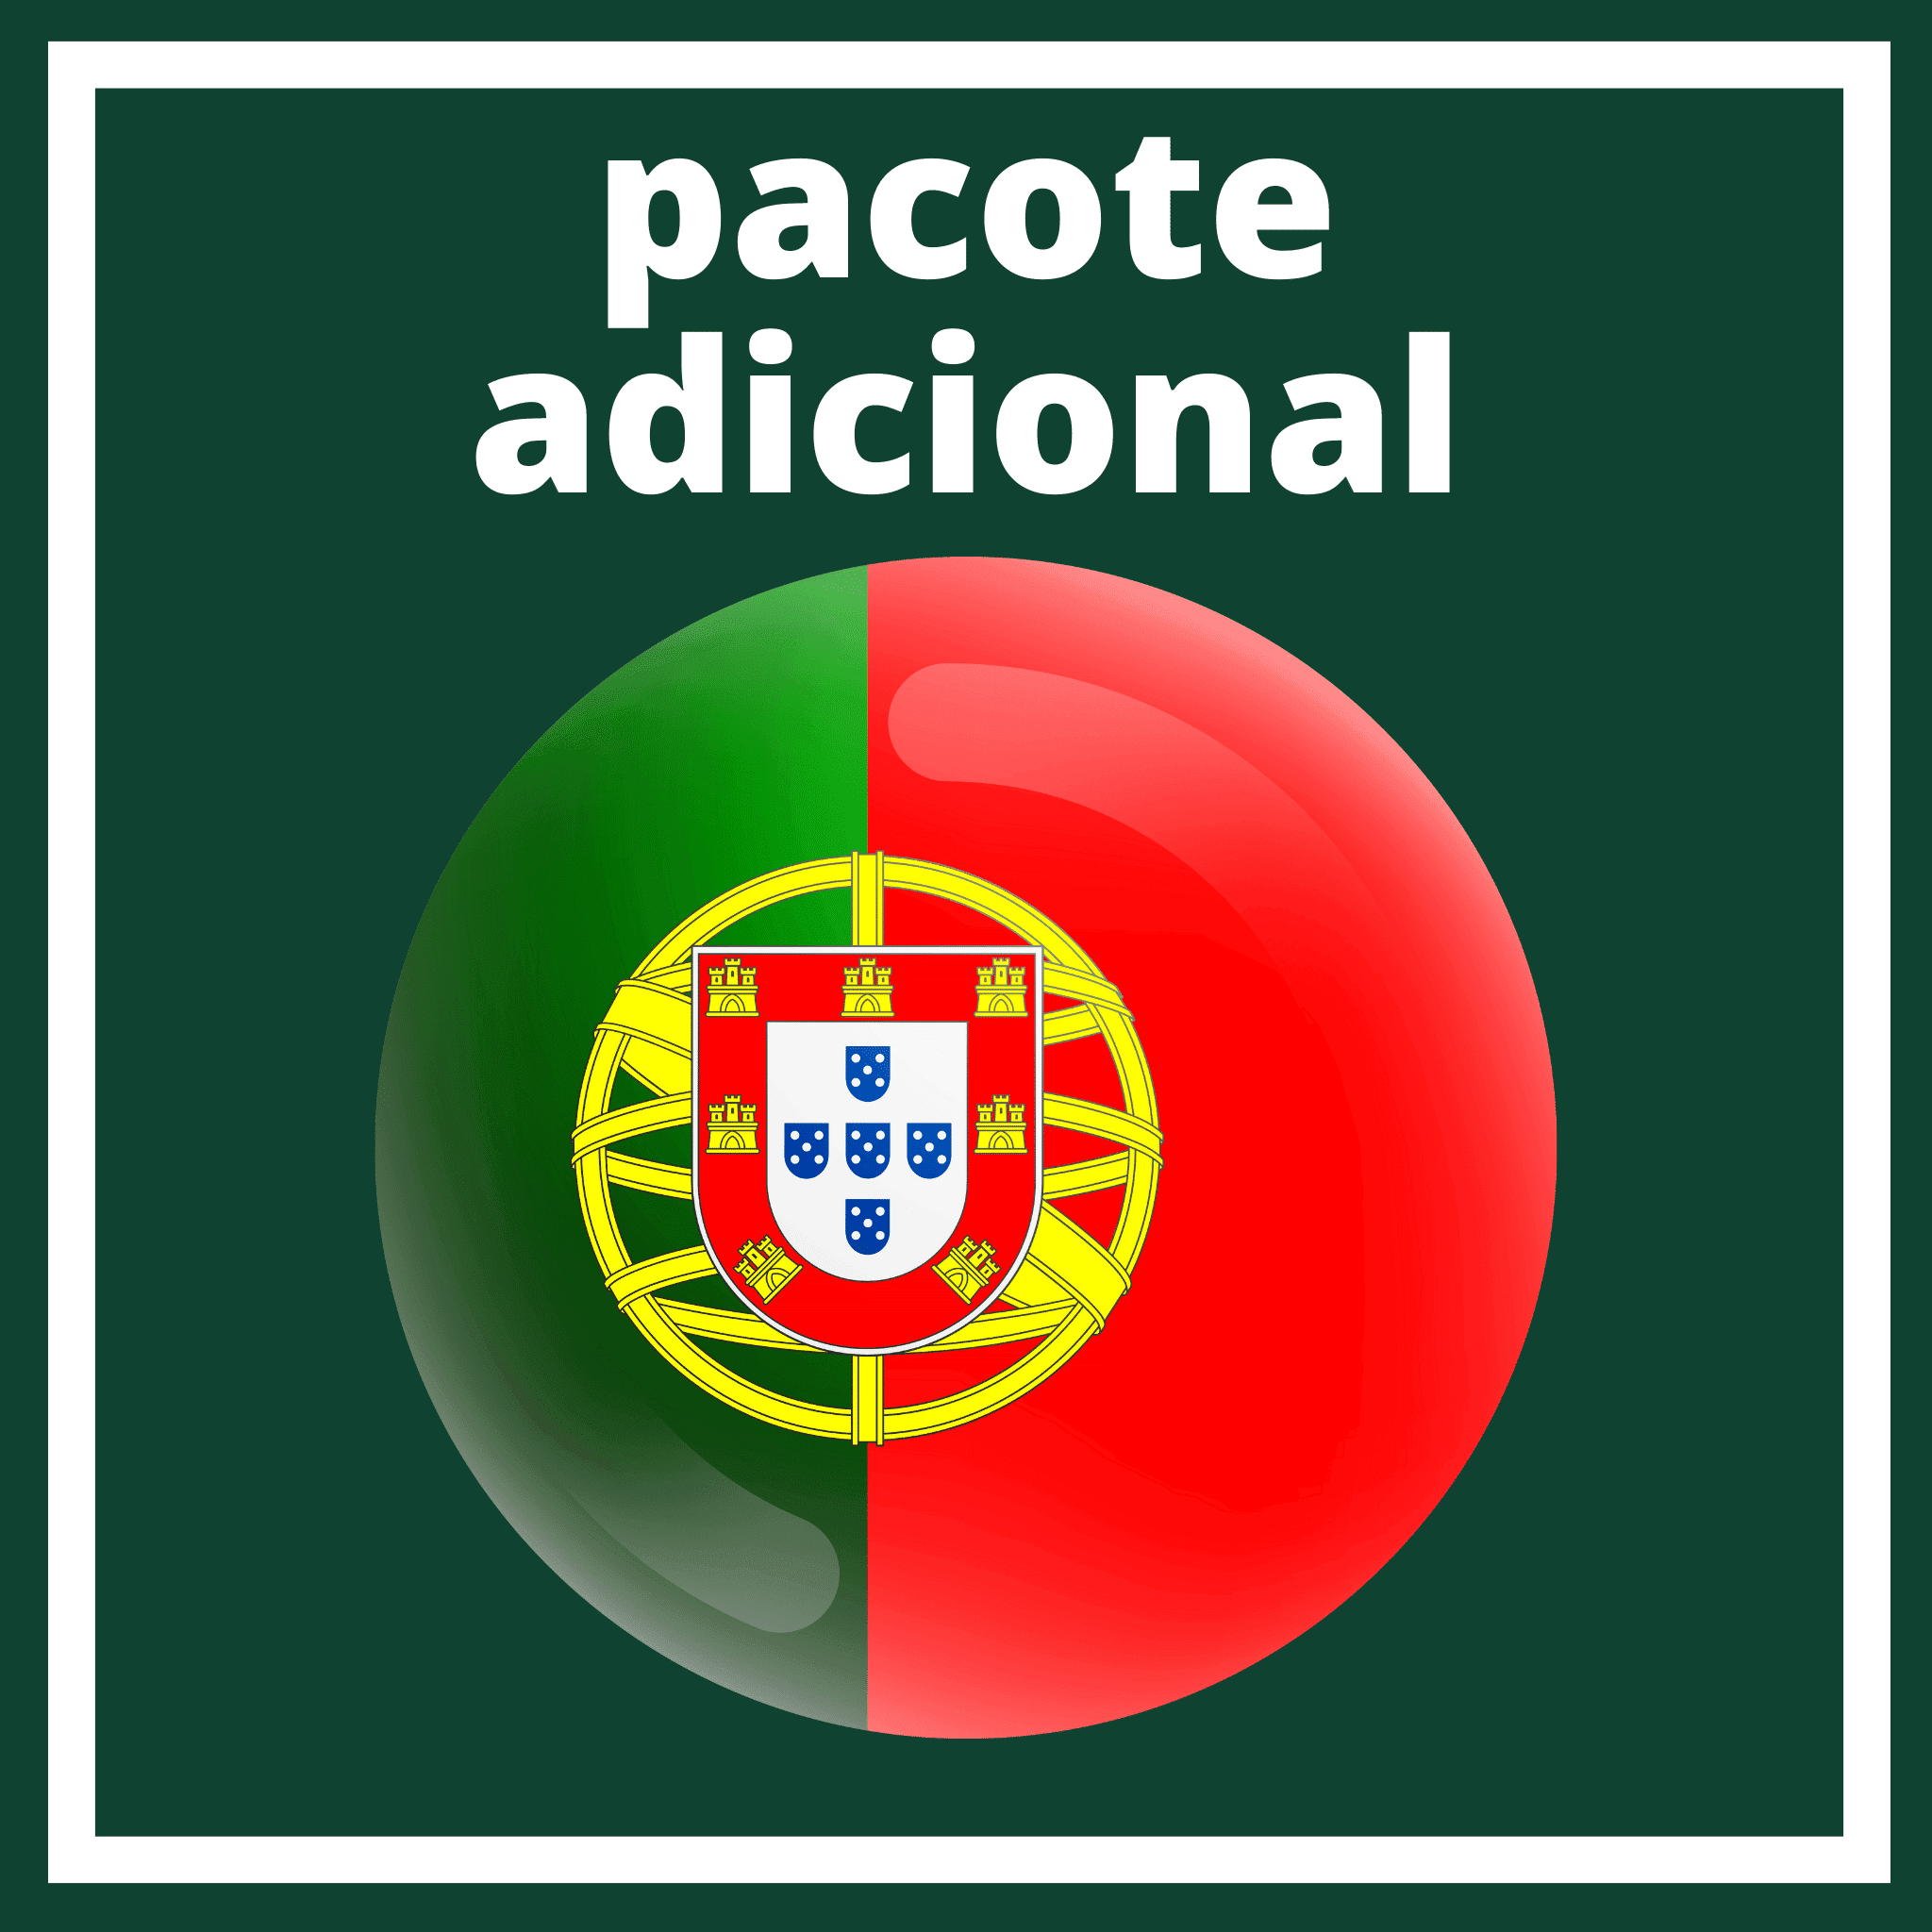 Paquete adicional Portugal